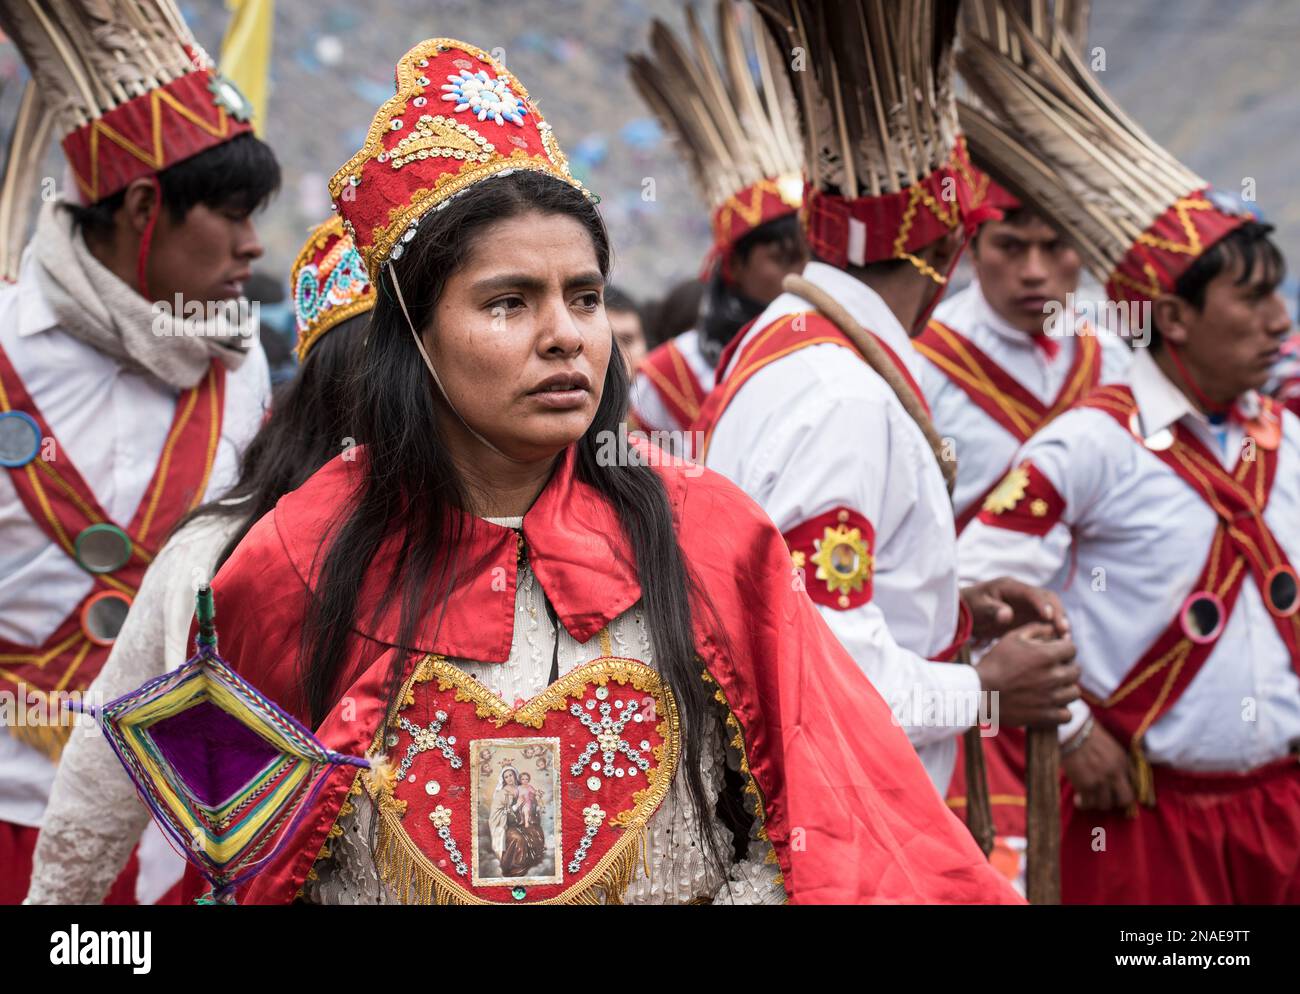 Pilgrims in traditional clothing celebrating Quyllurit'i festival Stock Photo